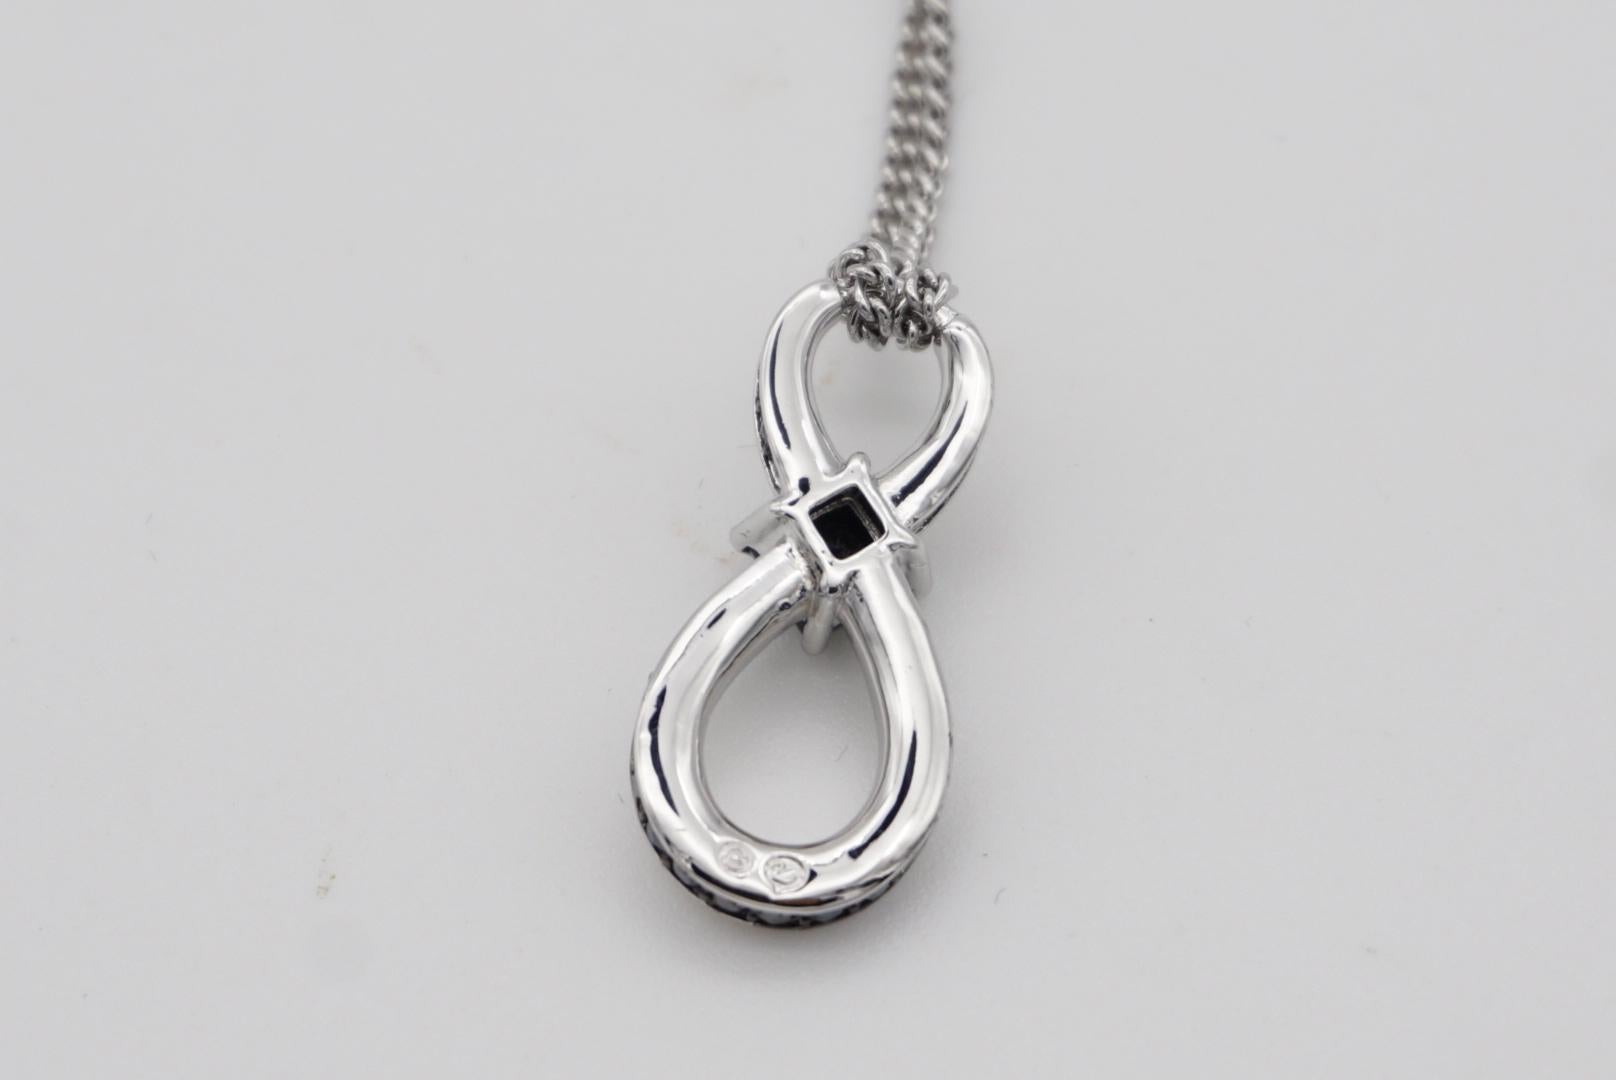 Swarovski Unisex Infinity Black Crystal White Silver Pendant Long Necklace. BNWT 7